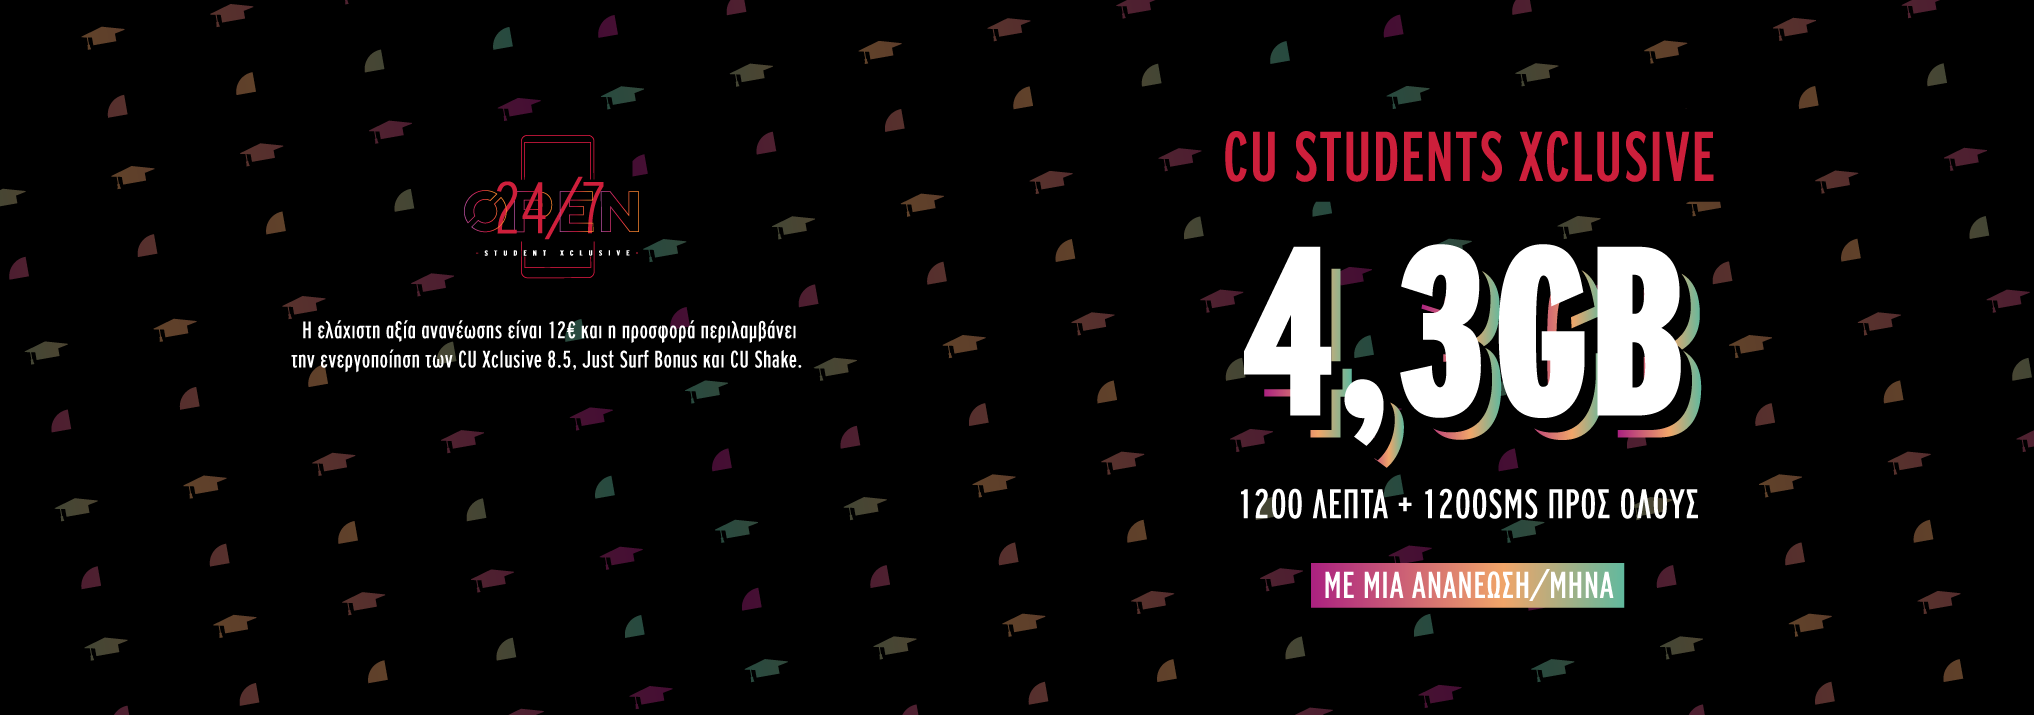 CU Student Campaign 2